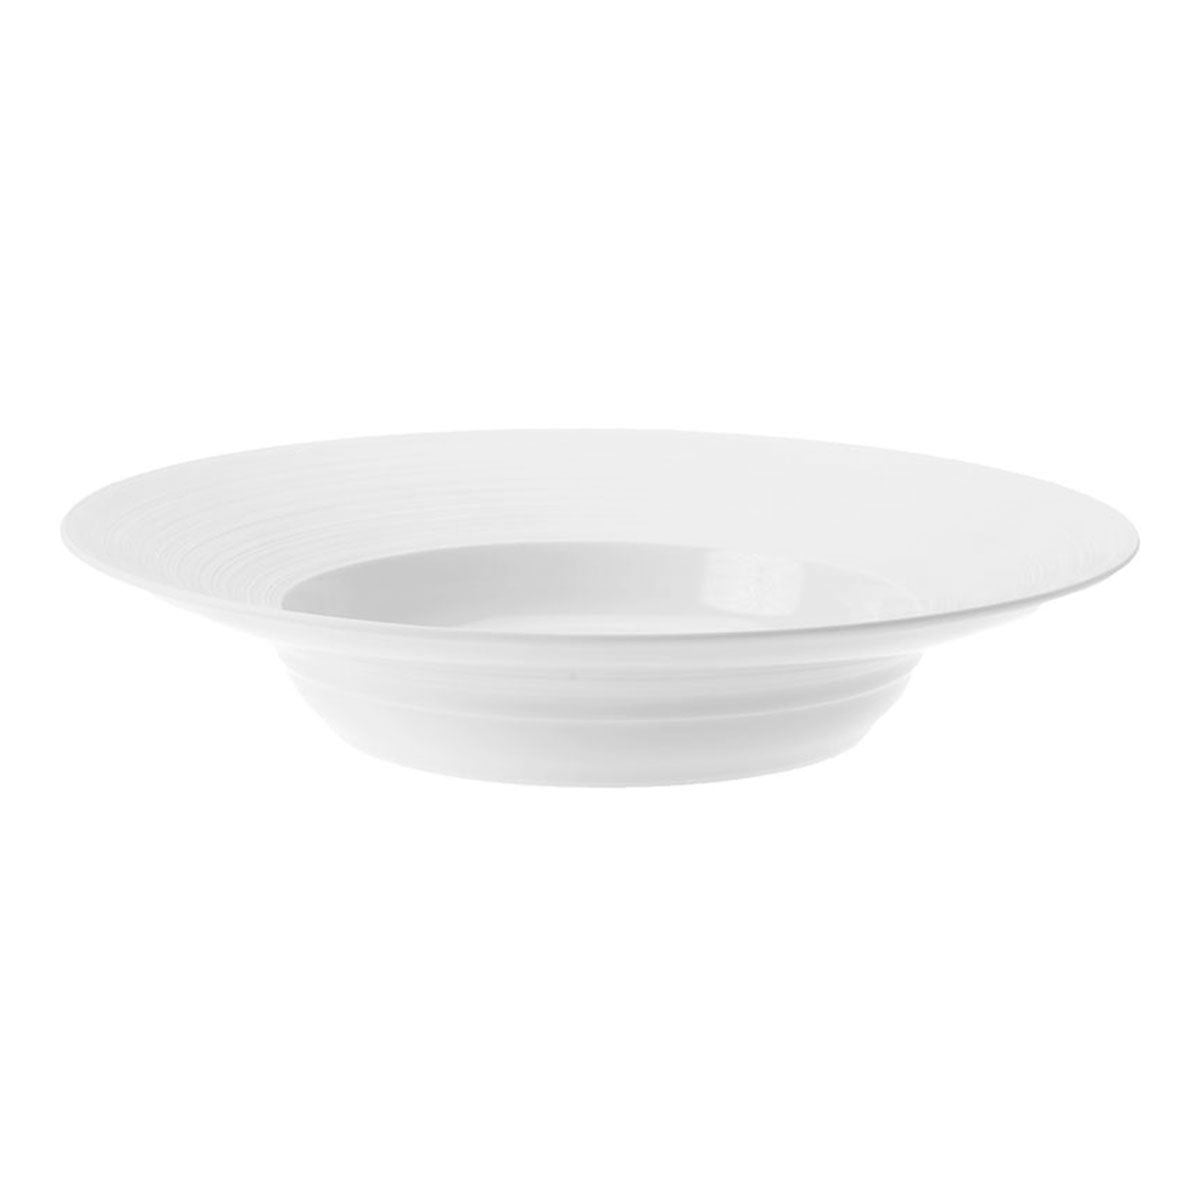 HEMISPHERE White Satin - Deep dish with wing